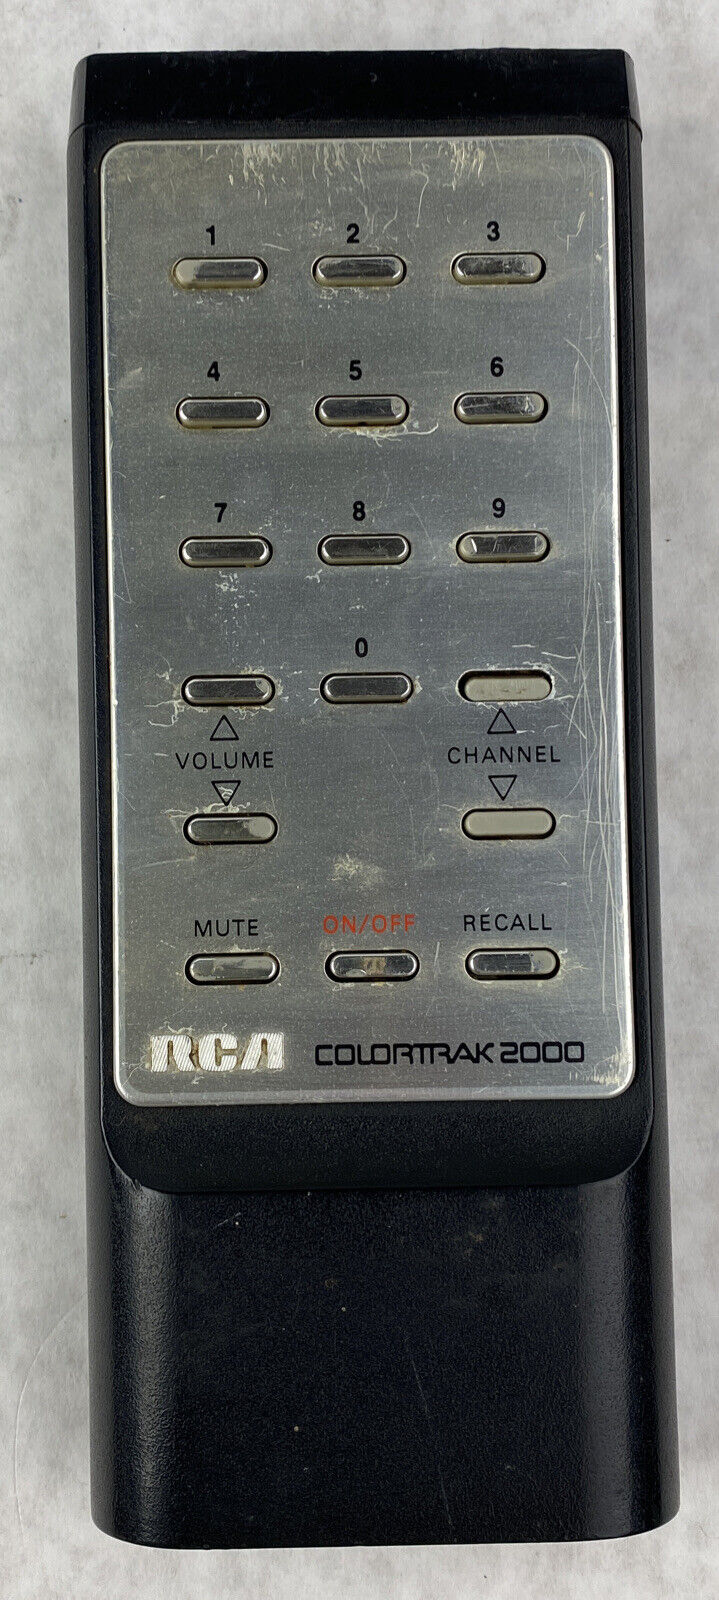 Genuine OEM Vintage RCA Colortrak 2000 TV Remote Control POWERS ON